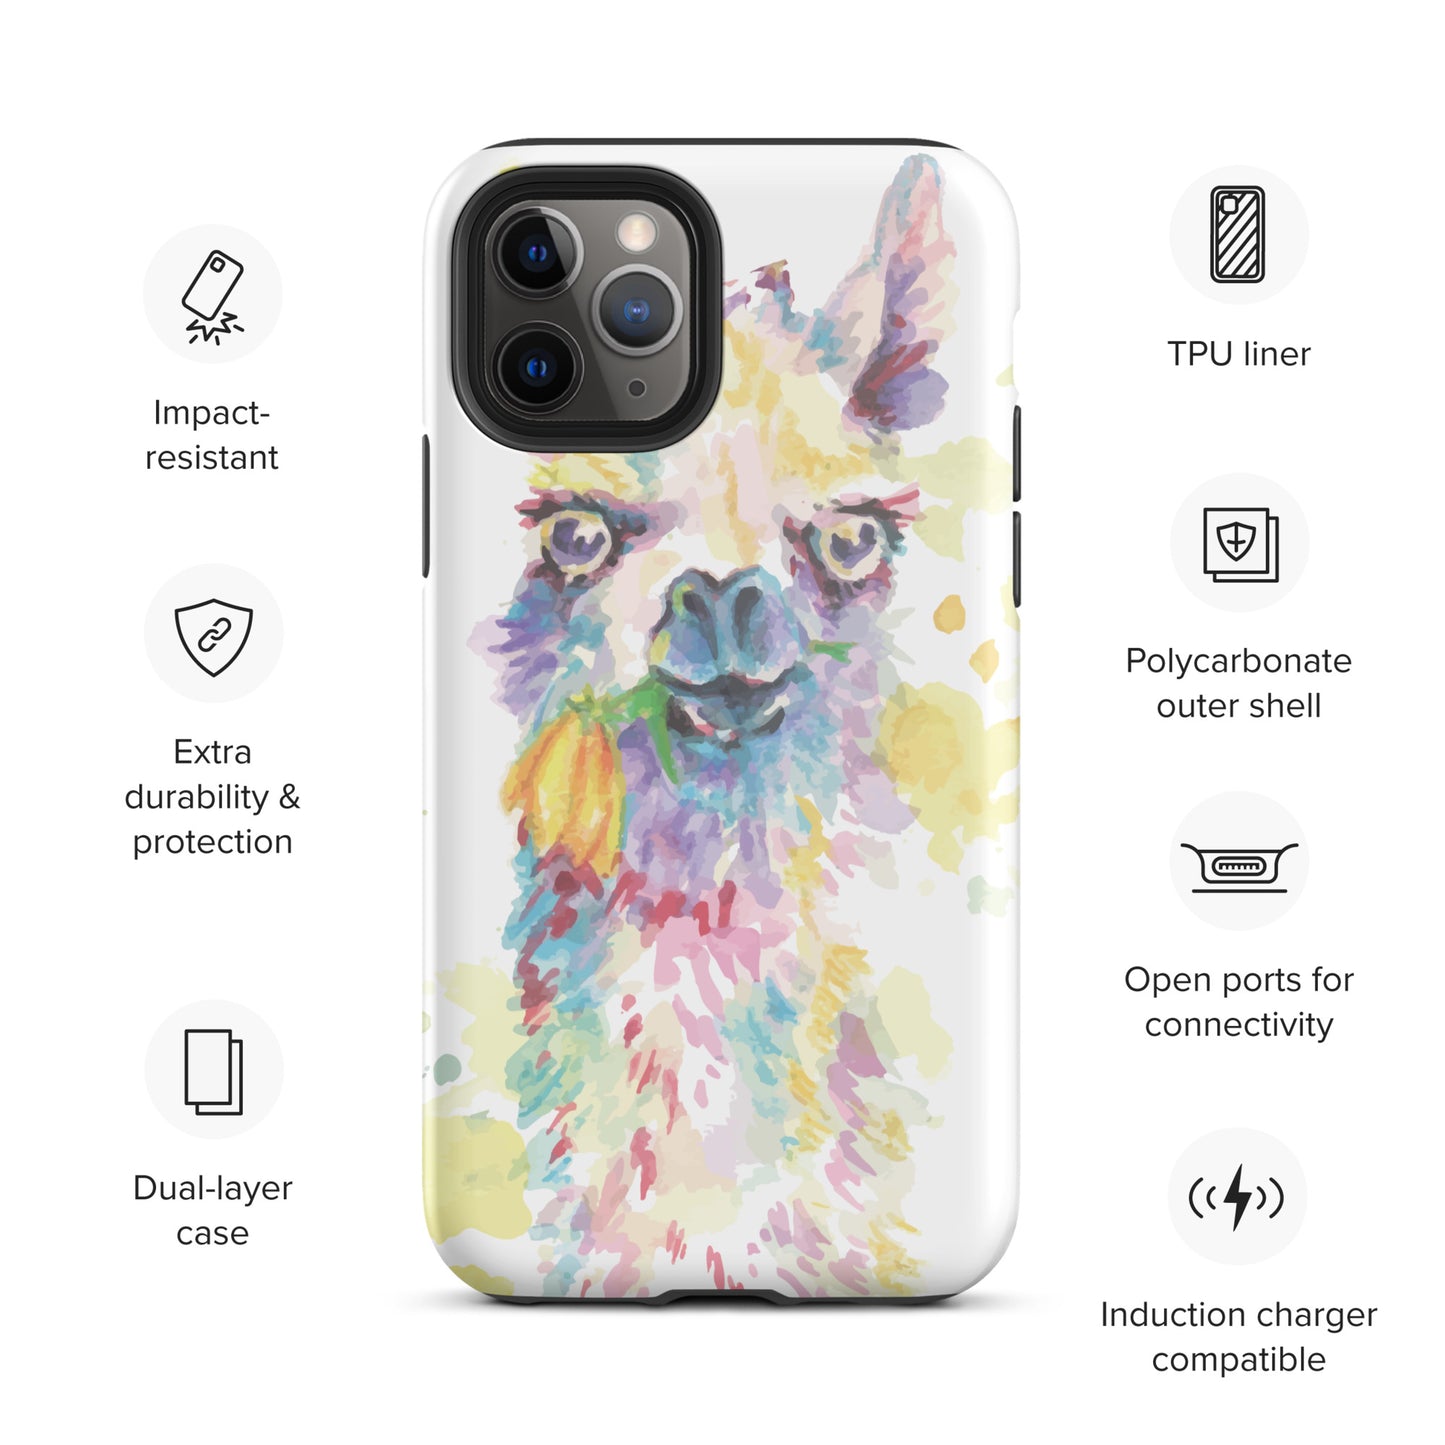 Llama Tough iPhone case